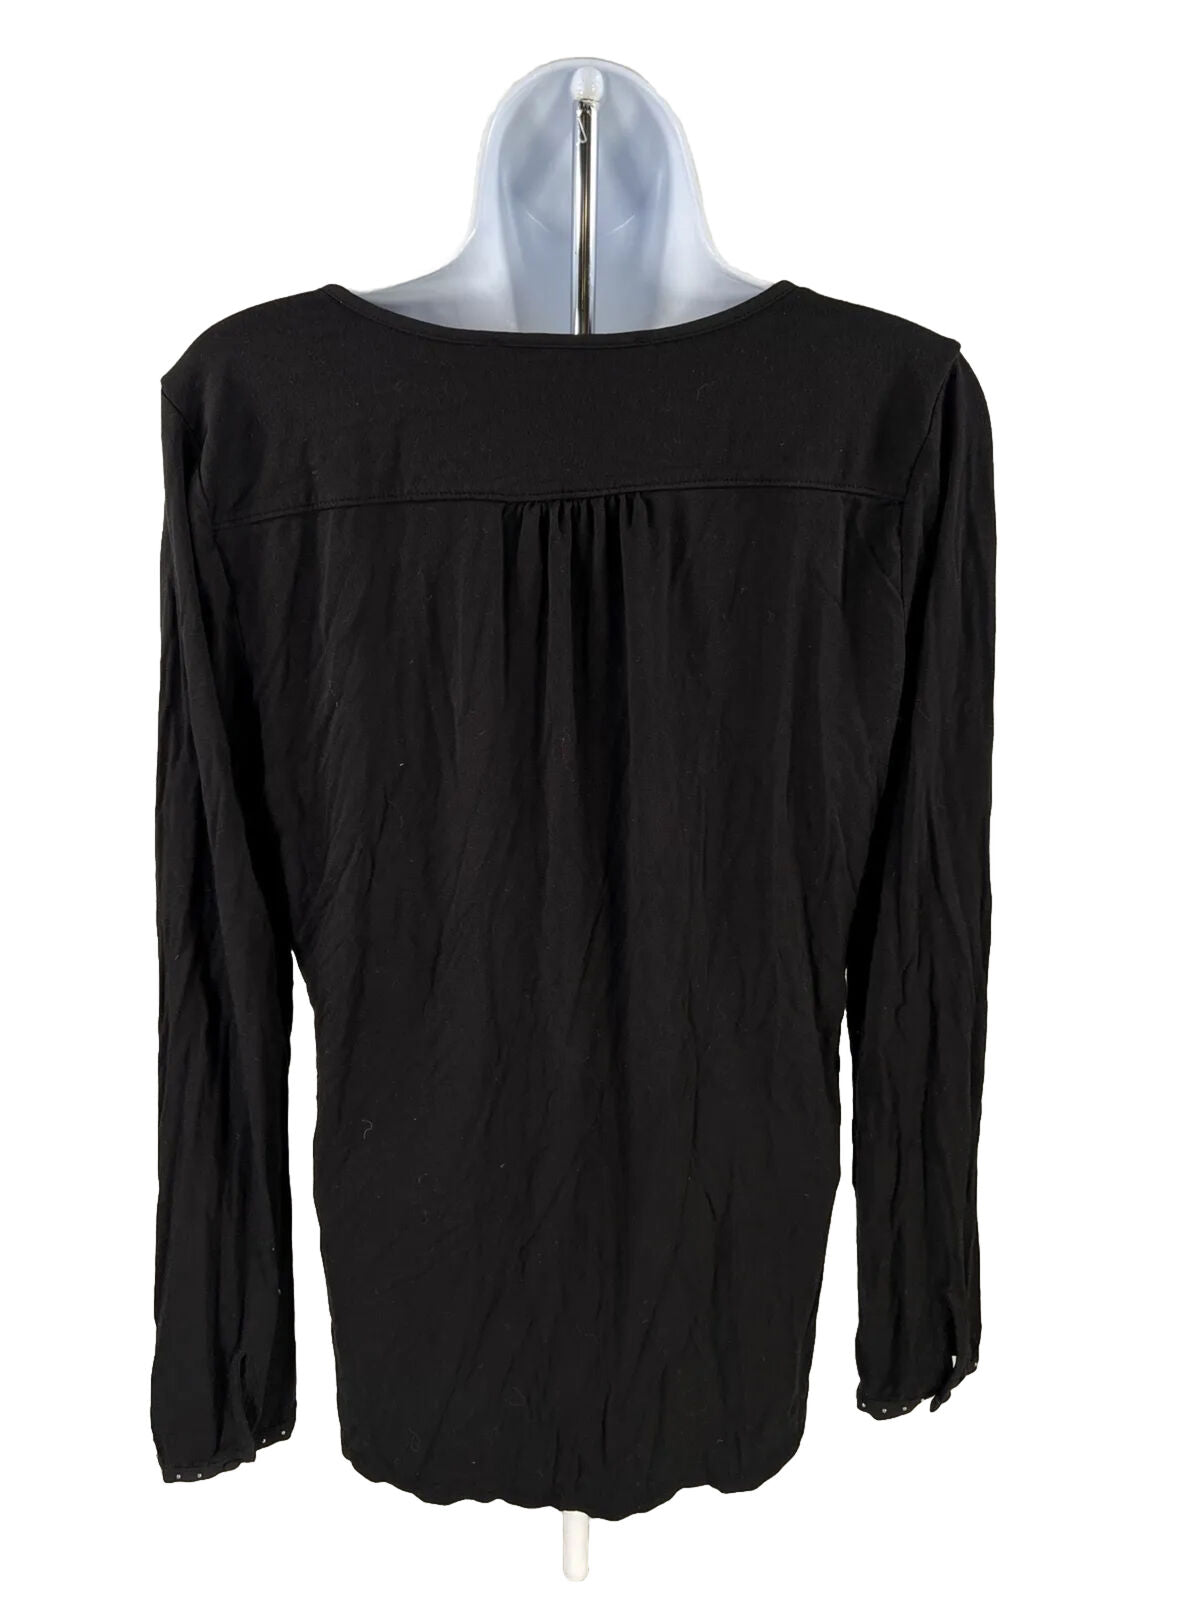 Camiseta negra de manga larga con cuello en V para mujer White House Back Market - M